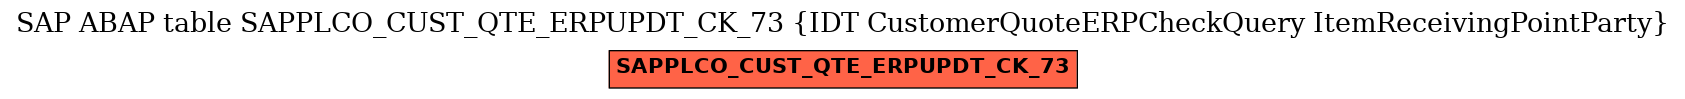 E-R Diagram for table SAPPLCO_CUST_QTE_ERPUPDT_CK_73 (IDT CustomerQuoteERPCheckQuery ItemReceivingPointParty)